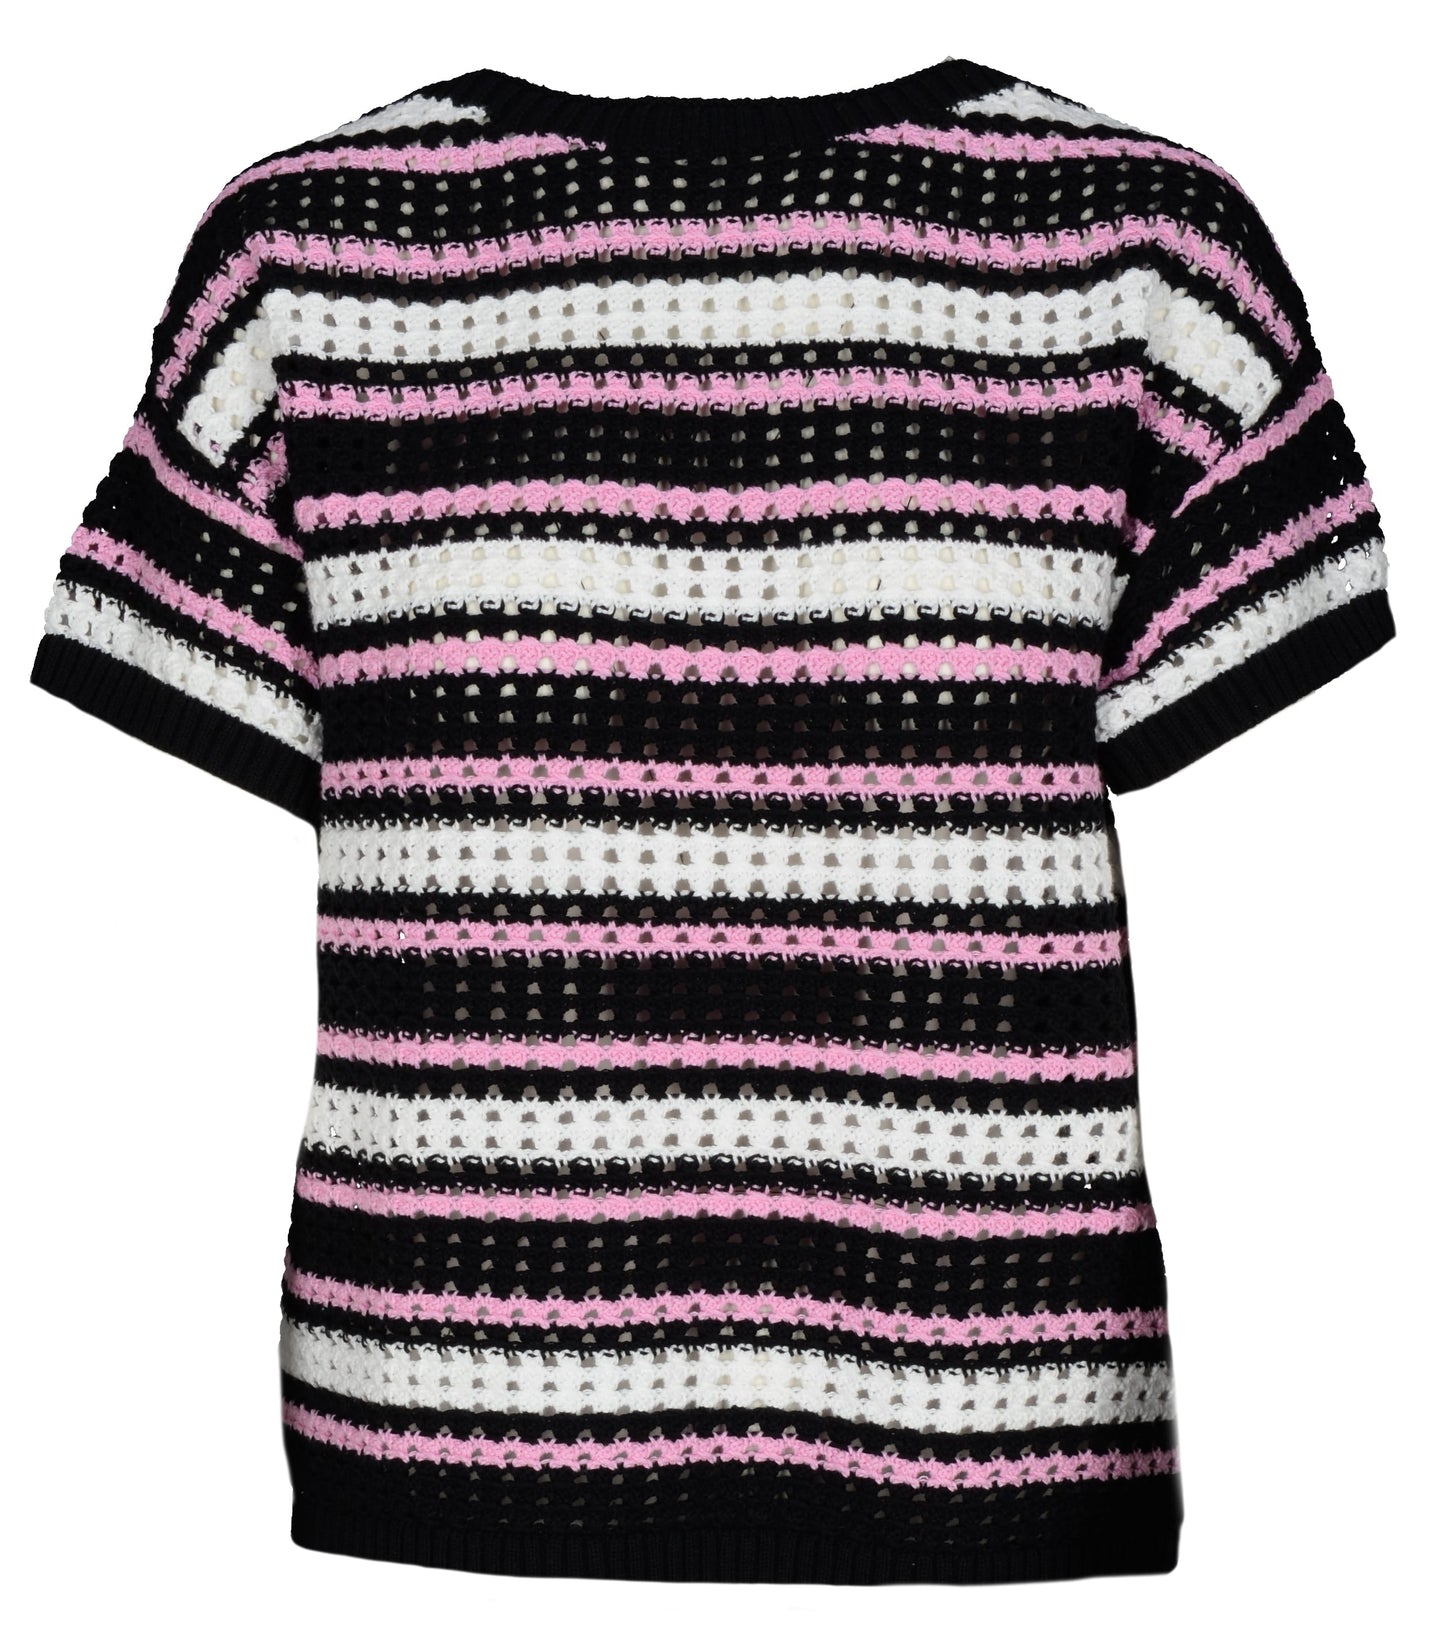 Openwork T-Shirt knitted